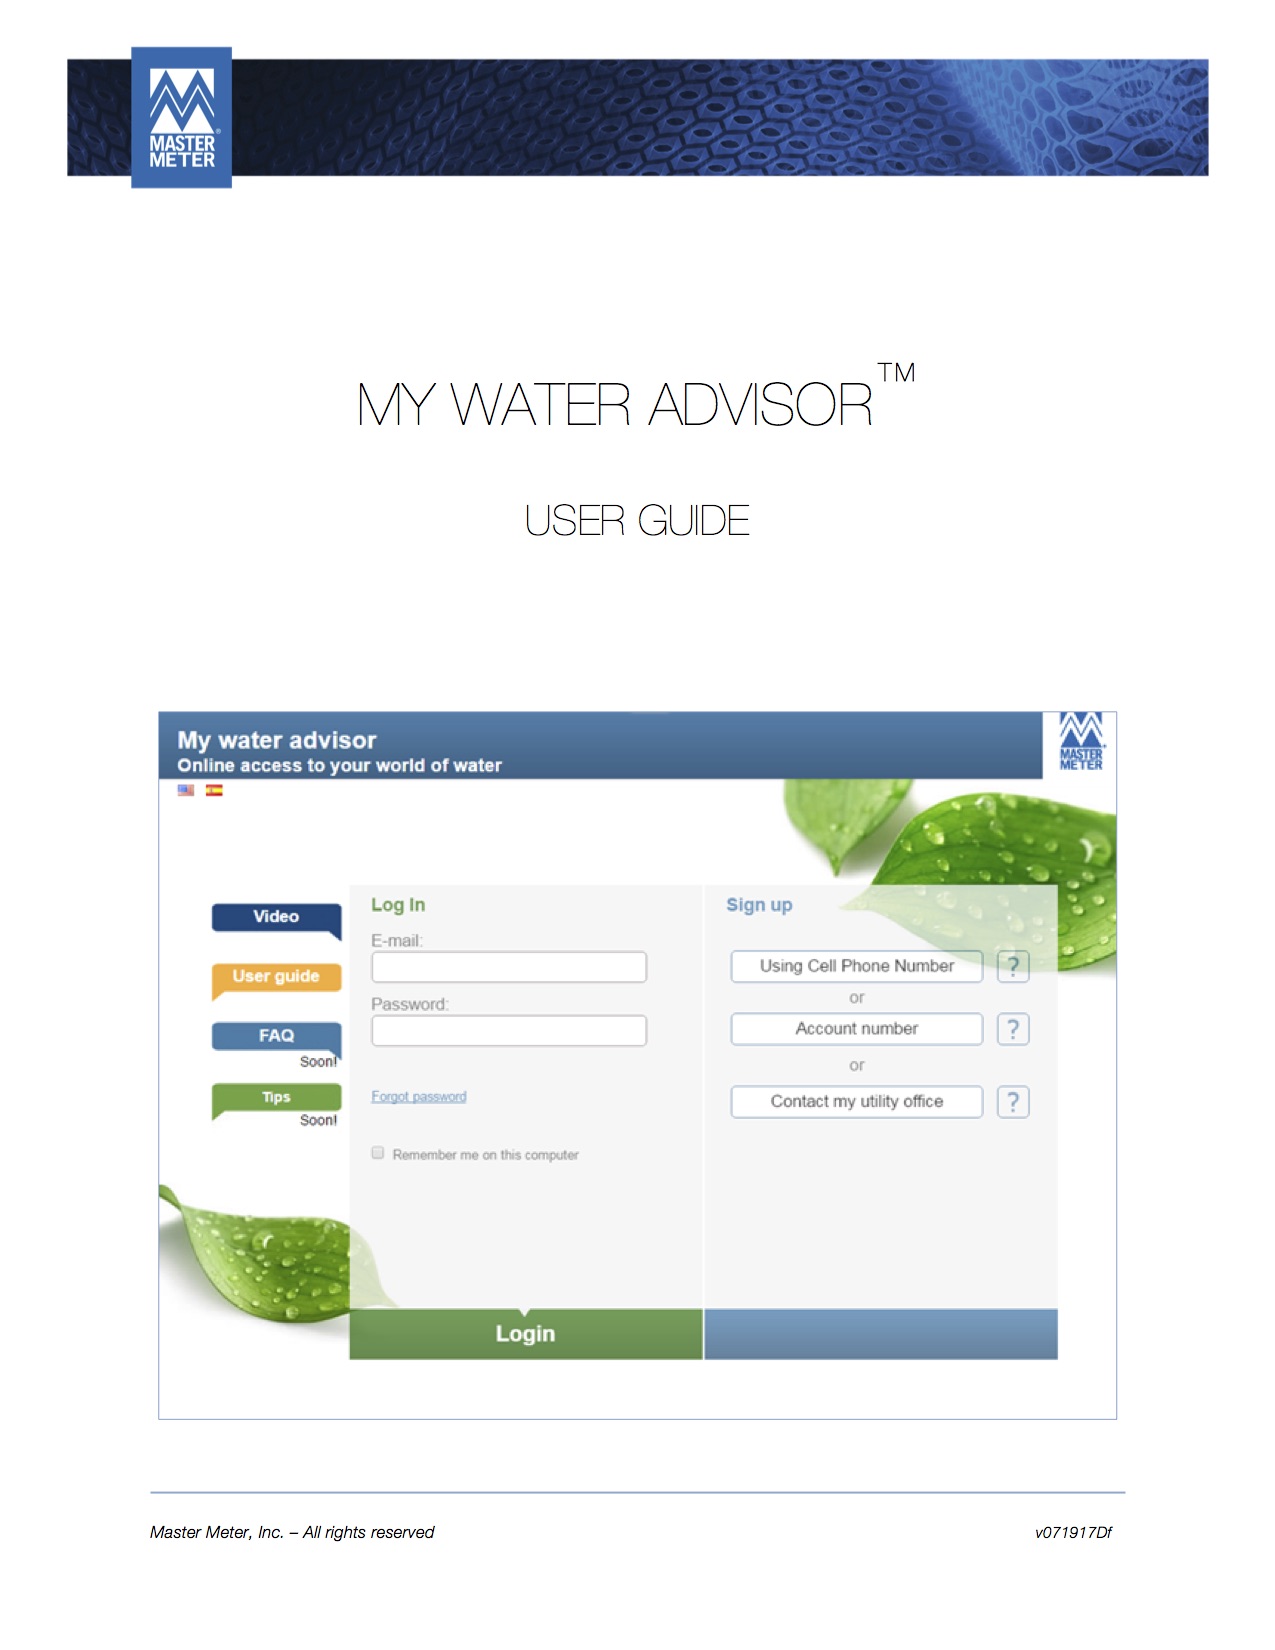 My Water Advisor Portal Guide